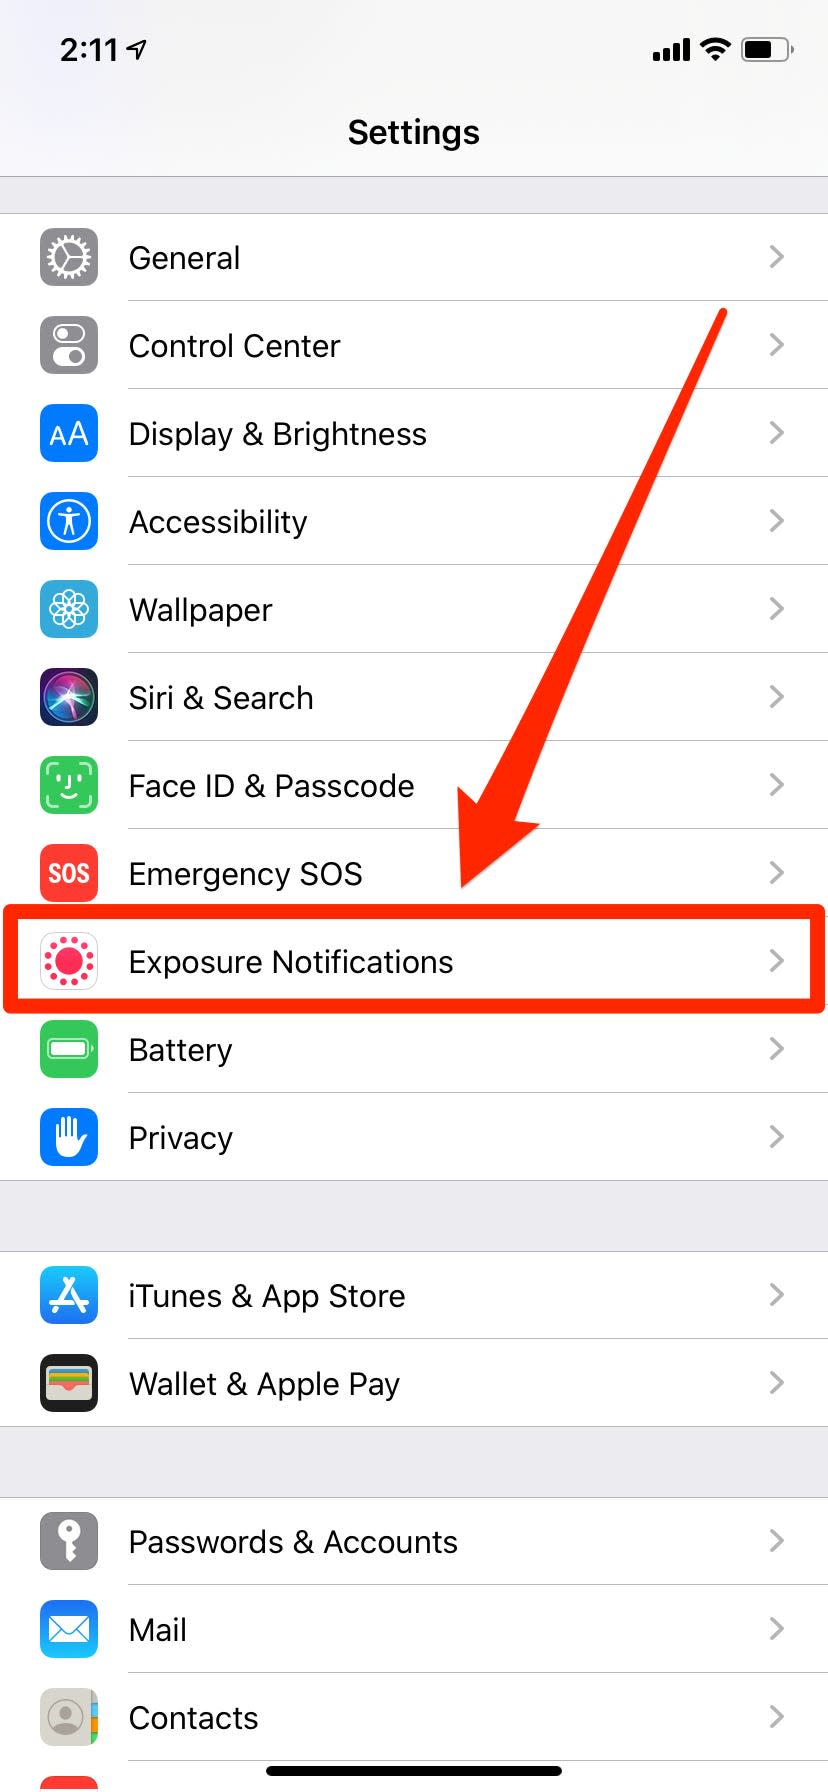 iphone exposure notifications 1.PNG